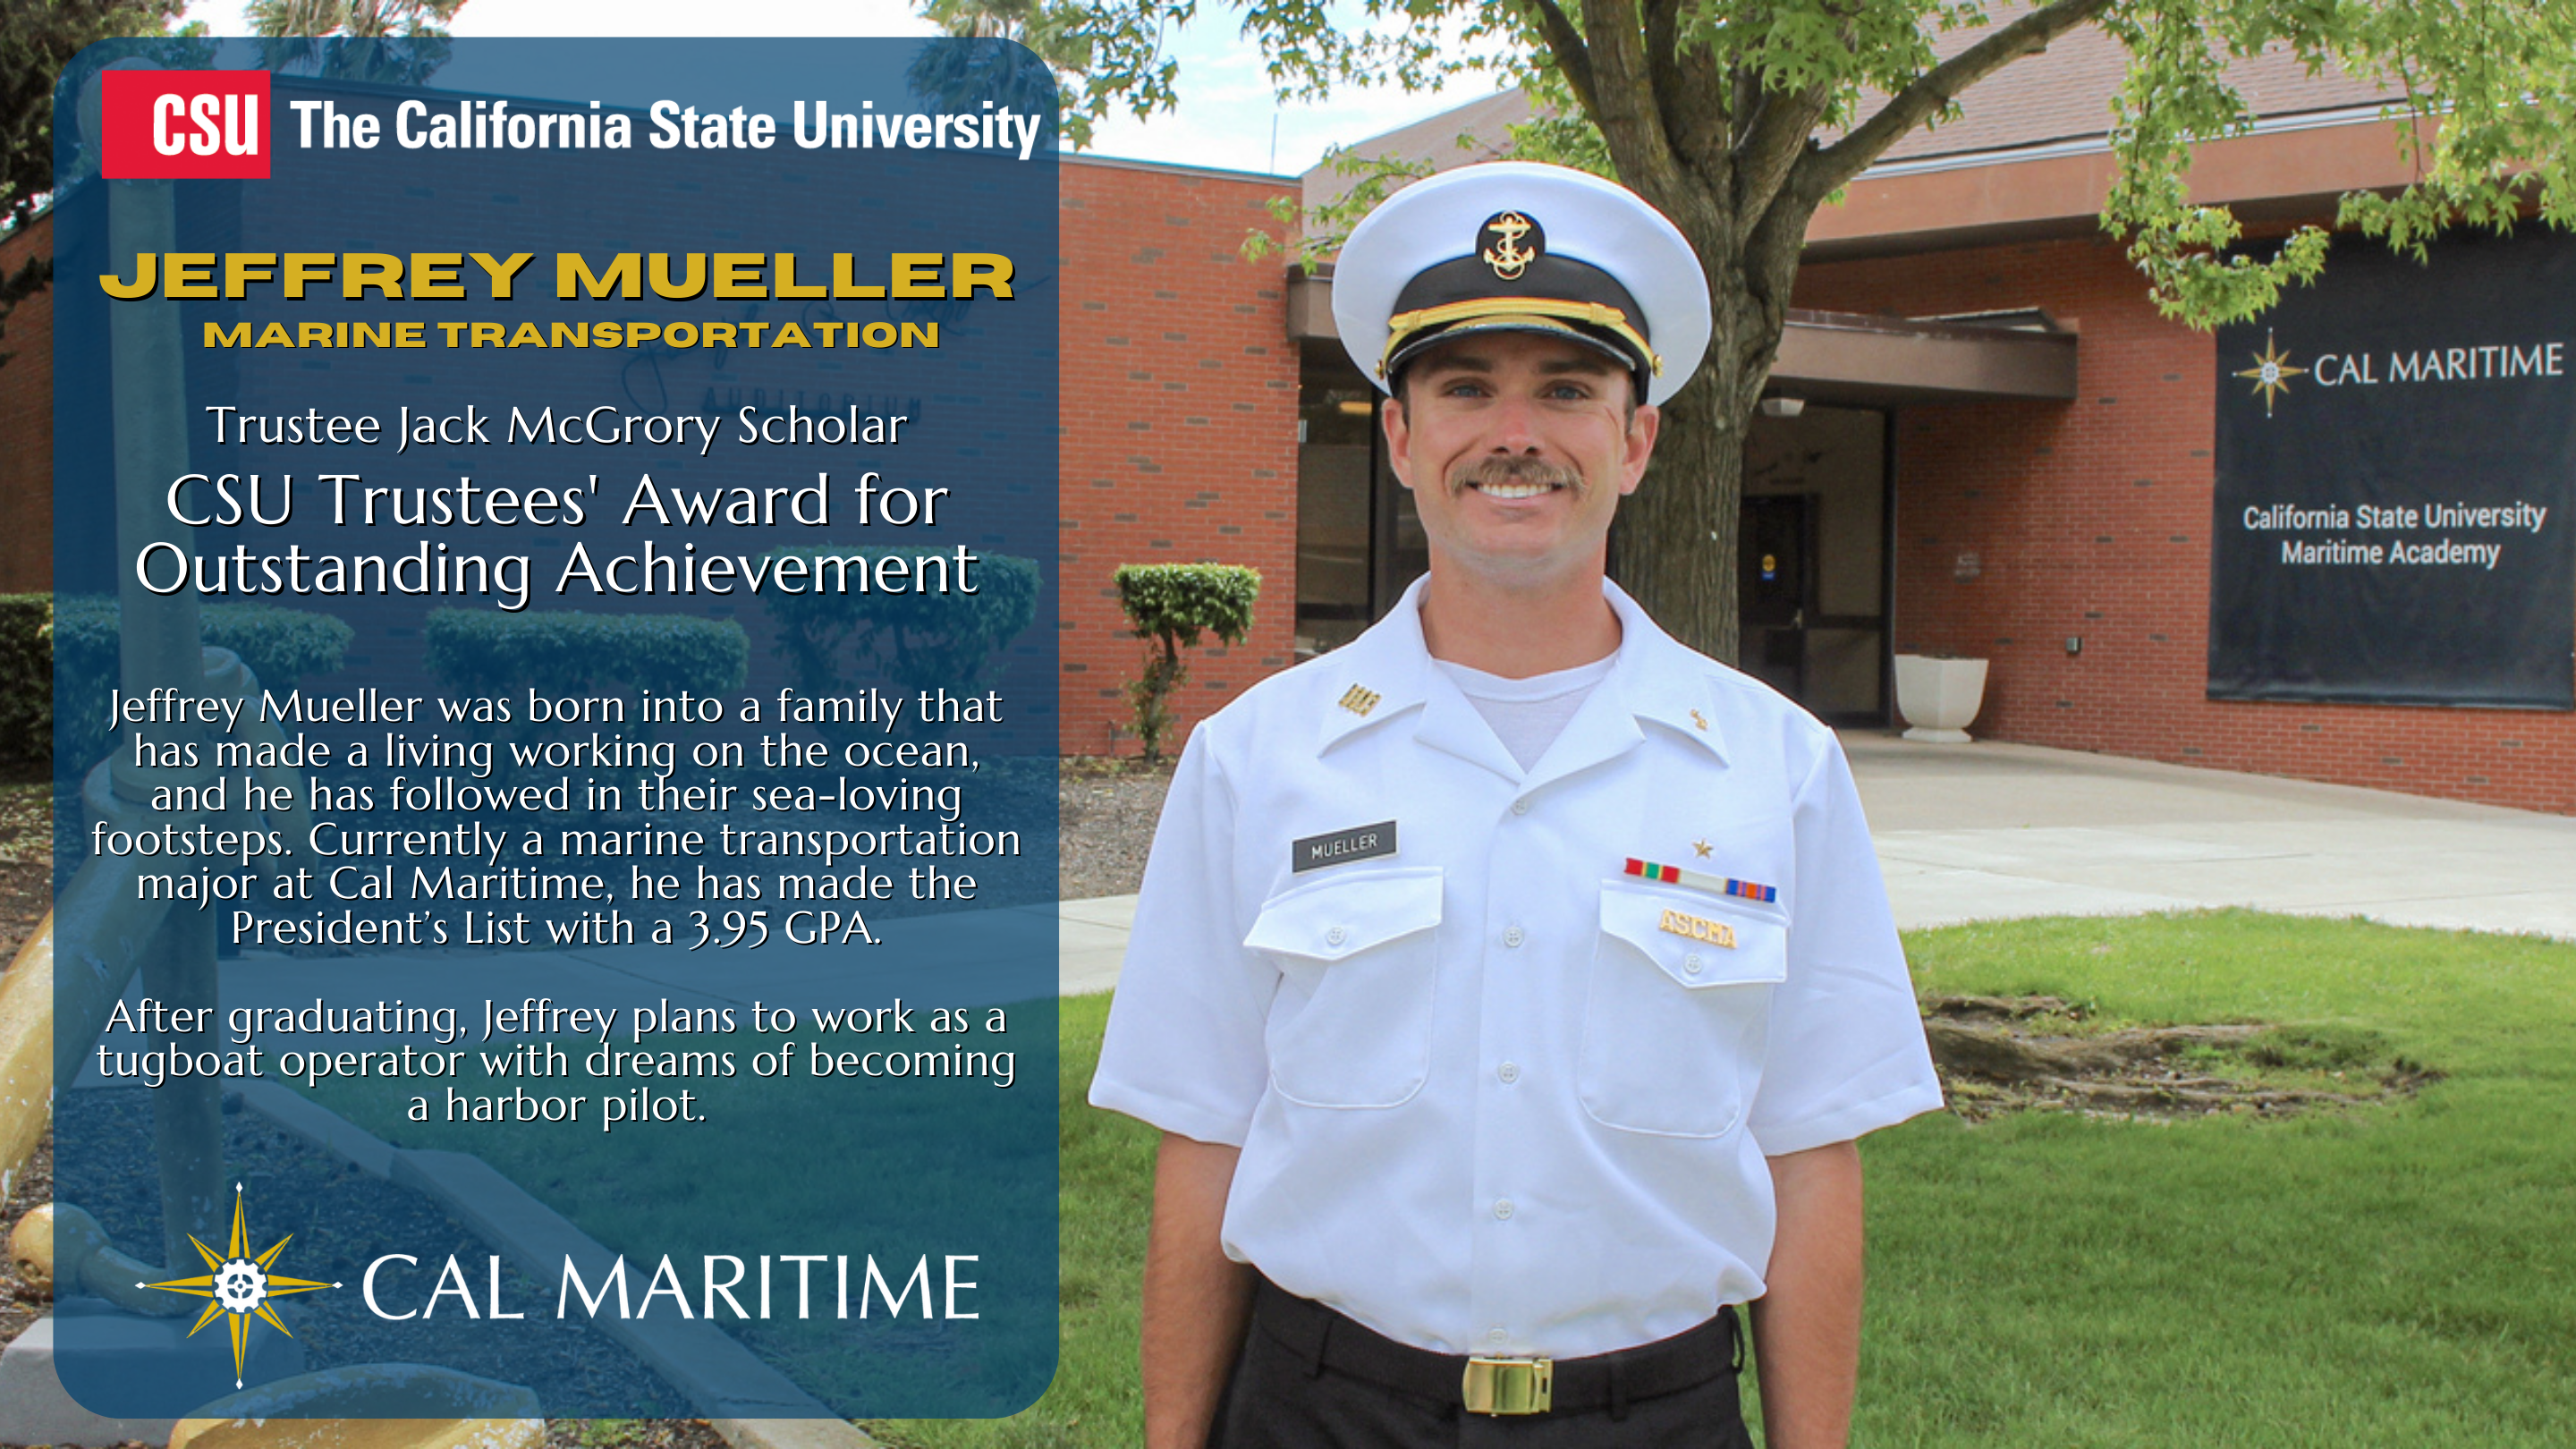 Jeffrey Mueller Receives the CSU Trustees' Award for Outstanding Achievement